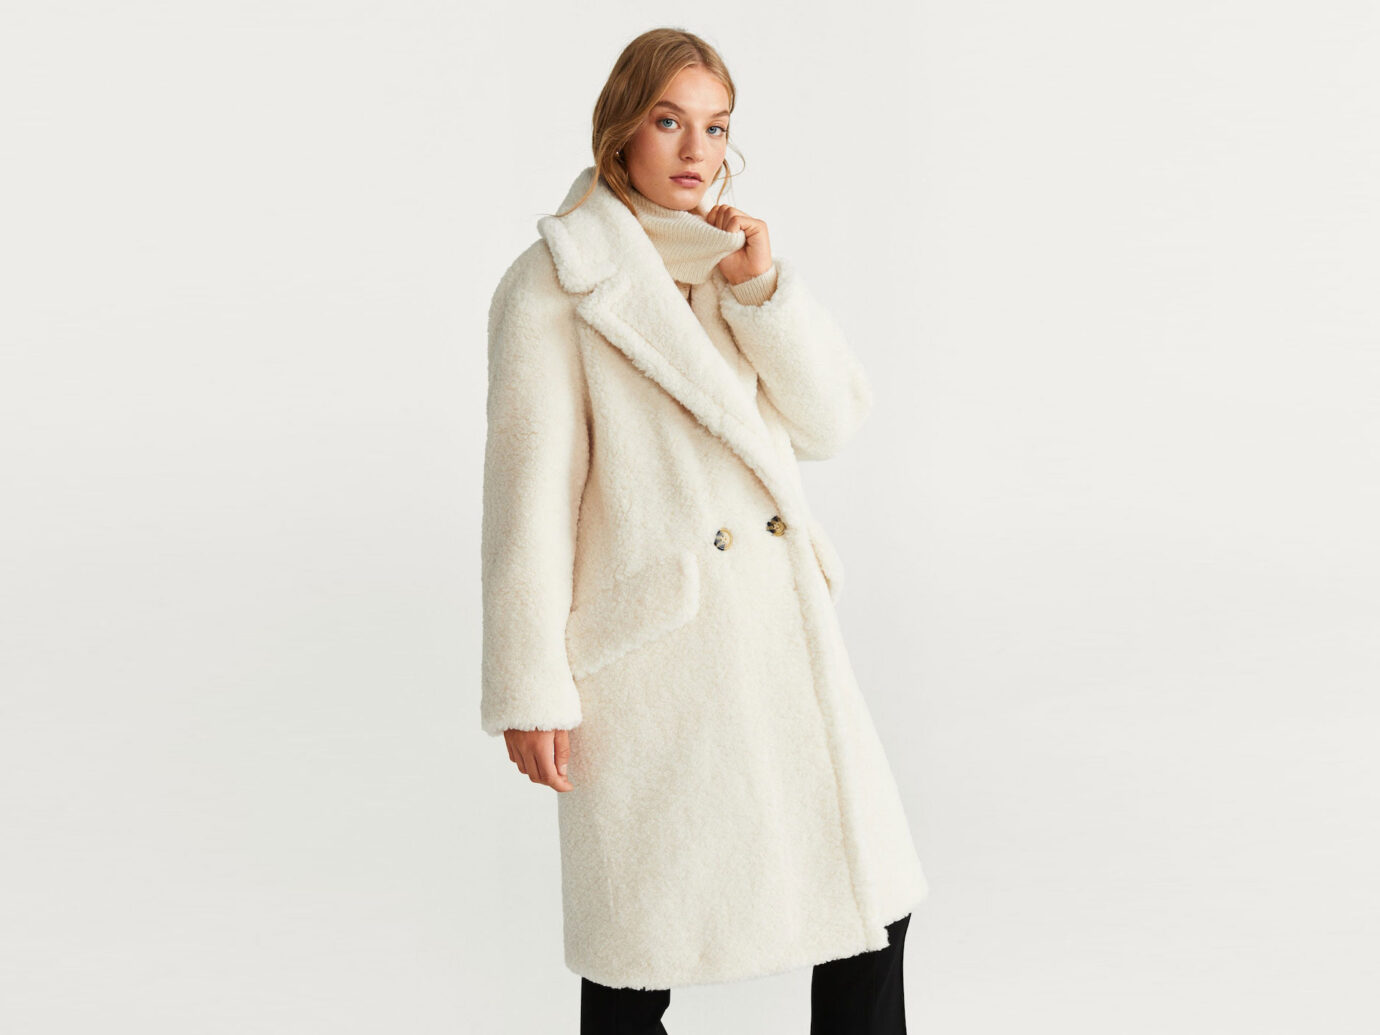 Most Popular Women's Winter Coats on Sale, 54% OFF | www.markiesminigolf.com